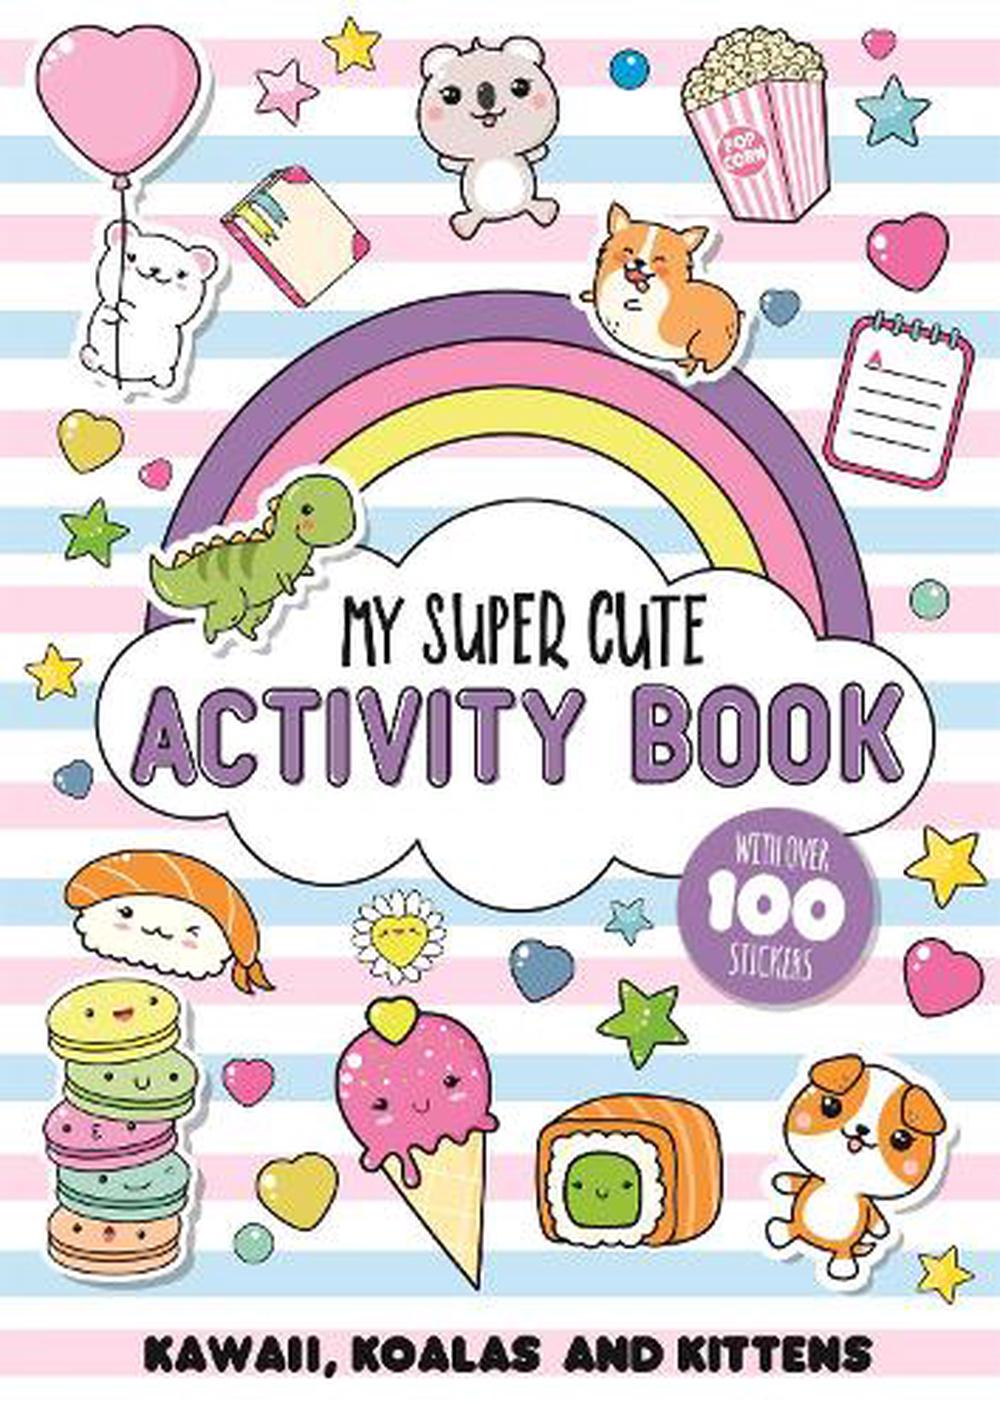 My Super Cute Activity Book: Kawaii, koalas and kittens by Orchard ...